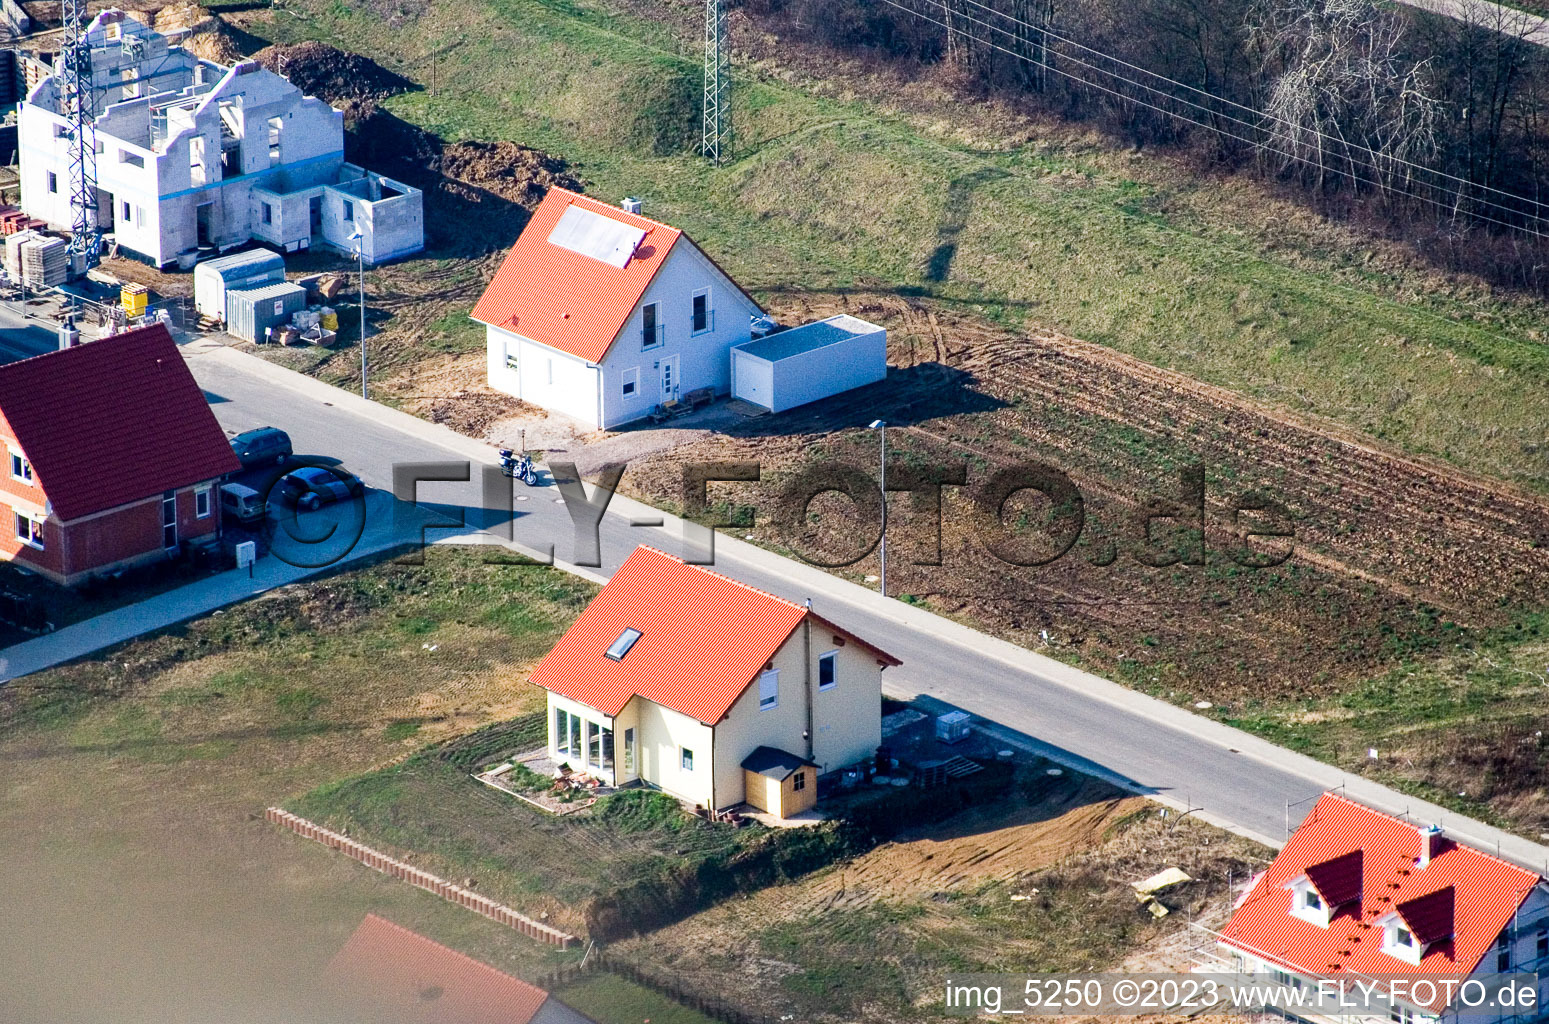 Drone recording of New development area NE in the district Schaidt in Wörth am Rhein in the state Rhineland-Palatinate, Germany